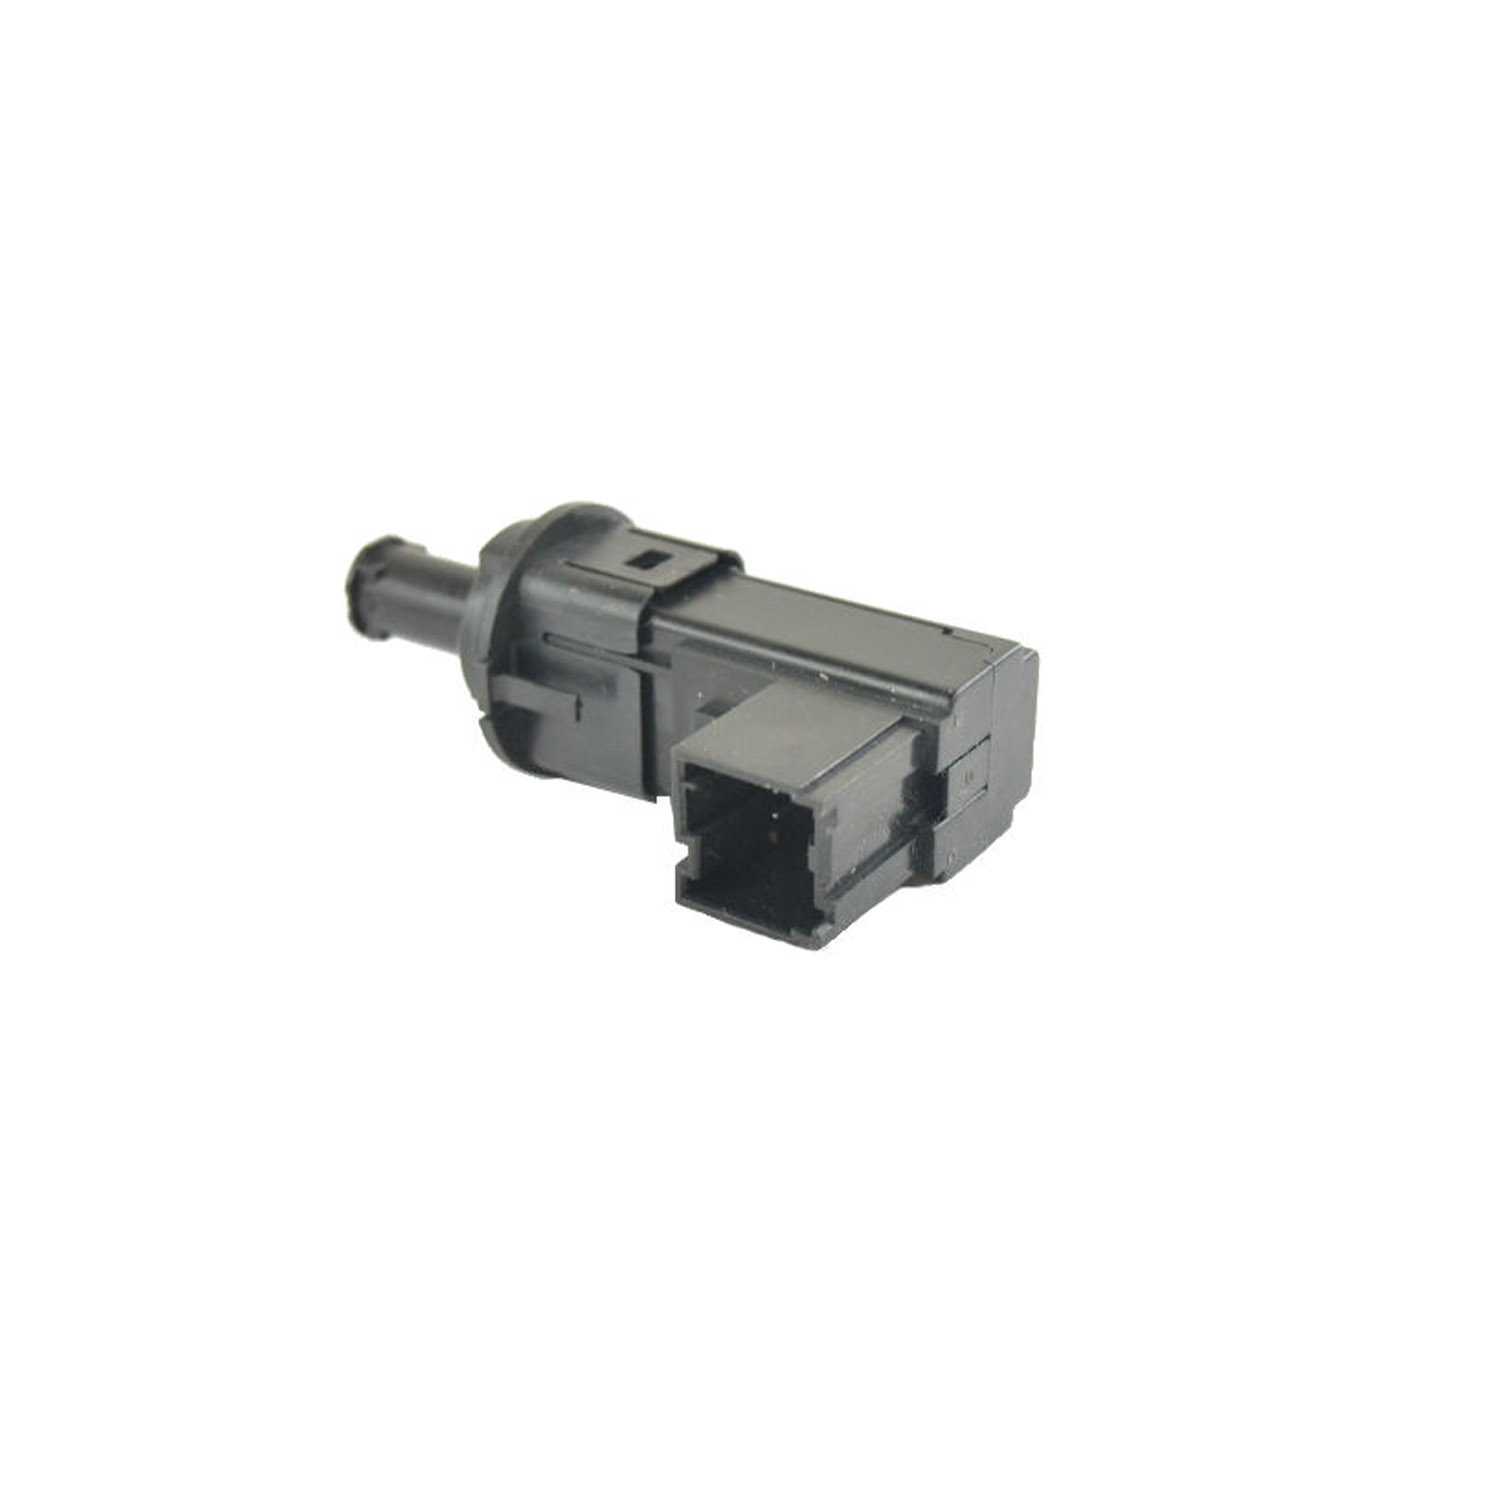 MOPAR PARTS - Brake Pedal Position Sensor - MOP 68078700AE